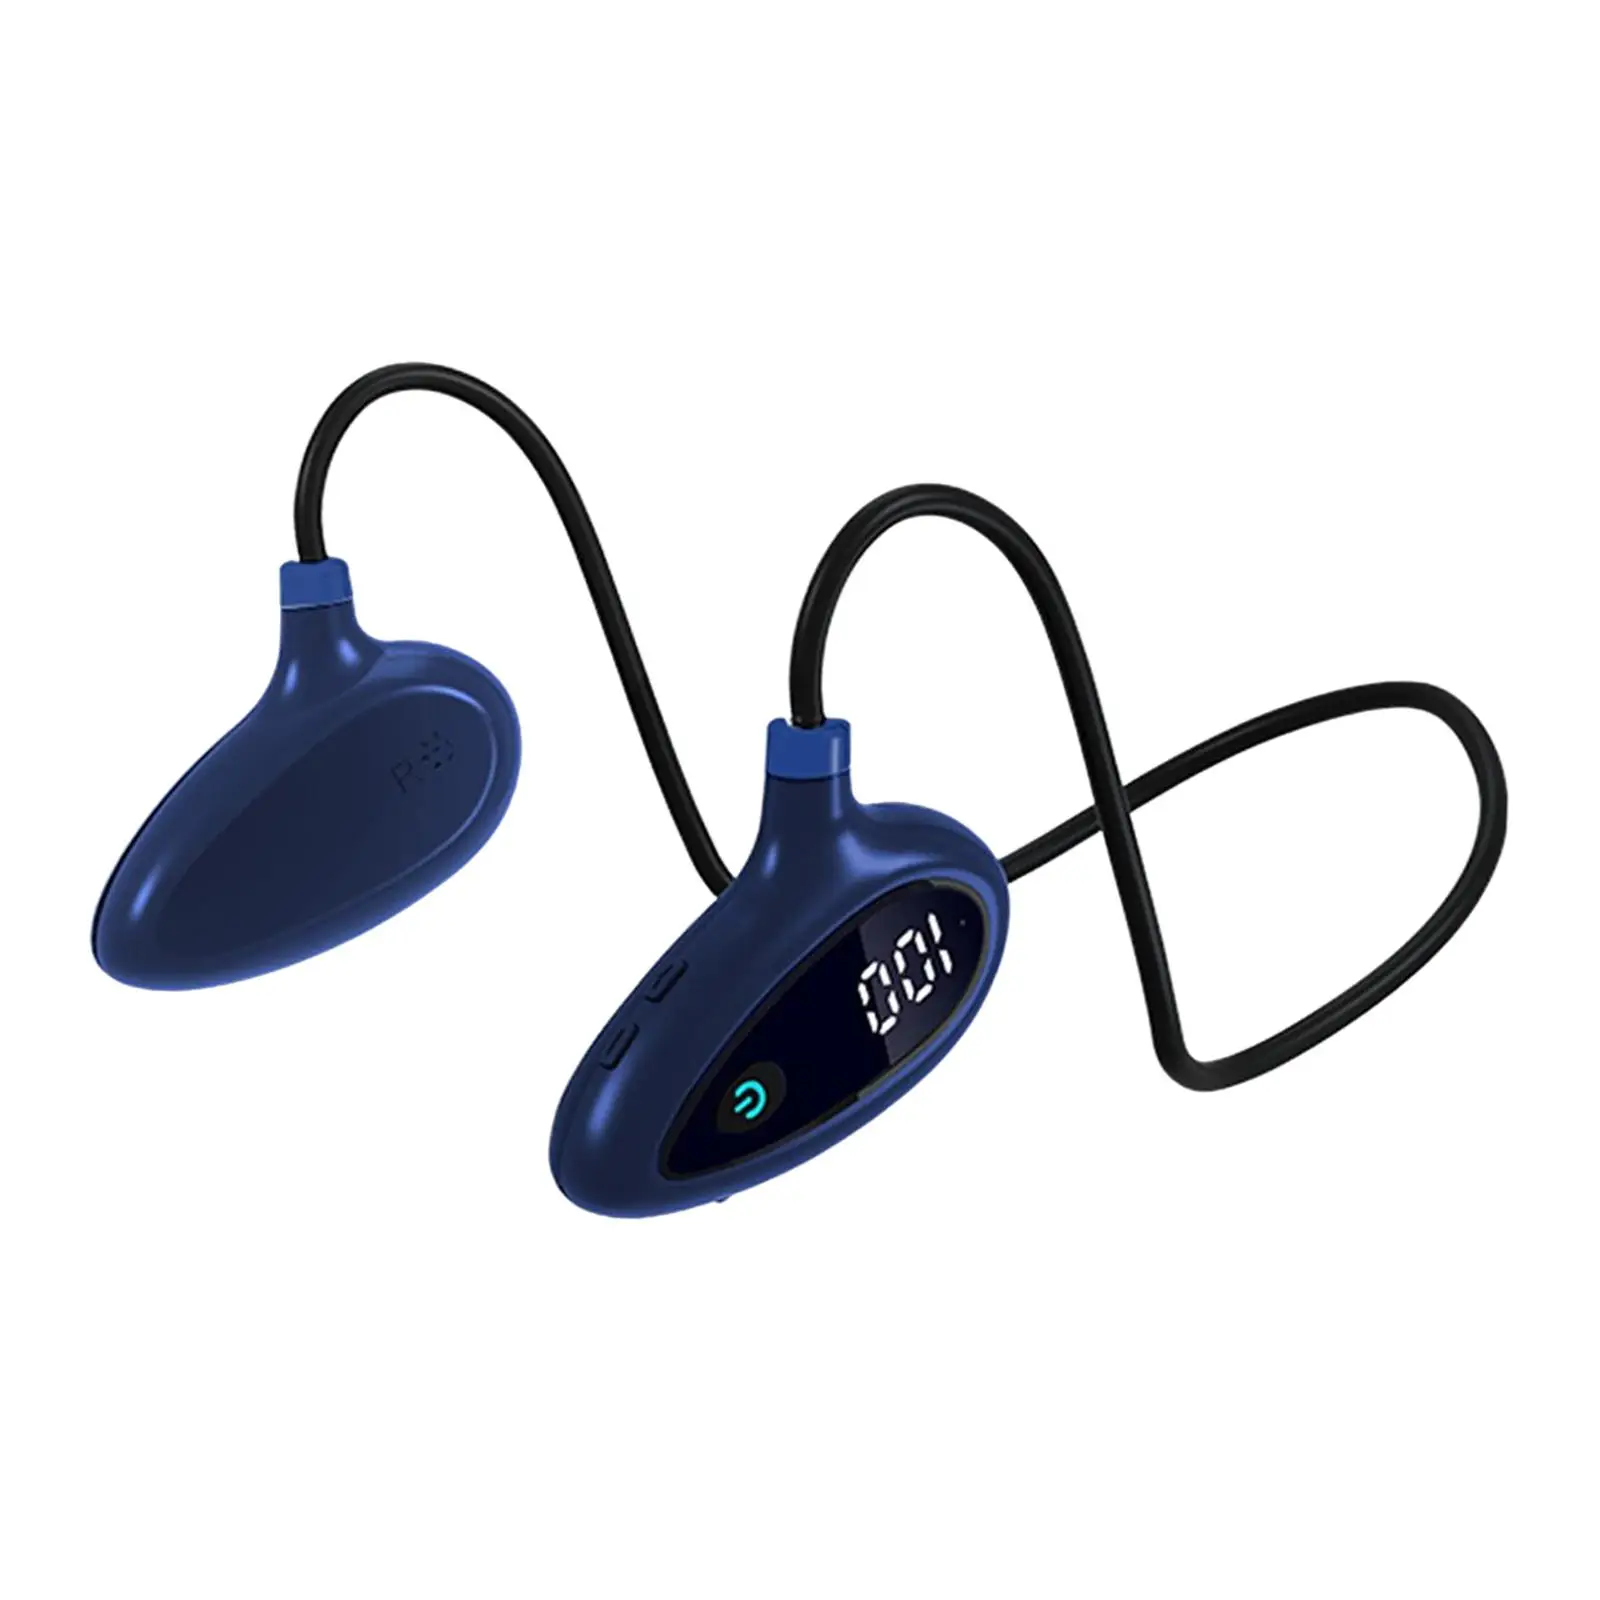 Sports Air Conduction Headset 180mAh Battery Capacity Earphones for Jogging Climbing